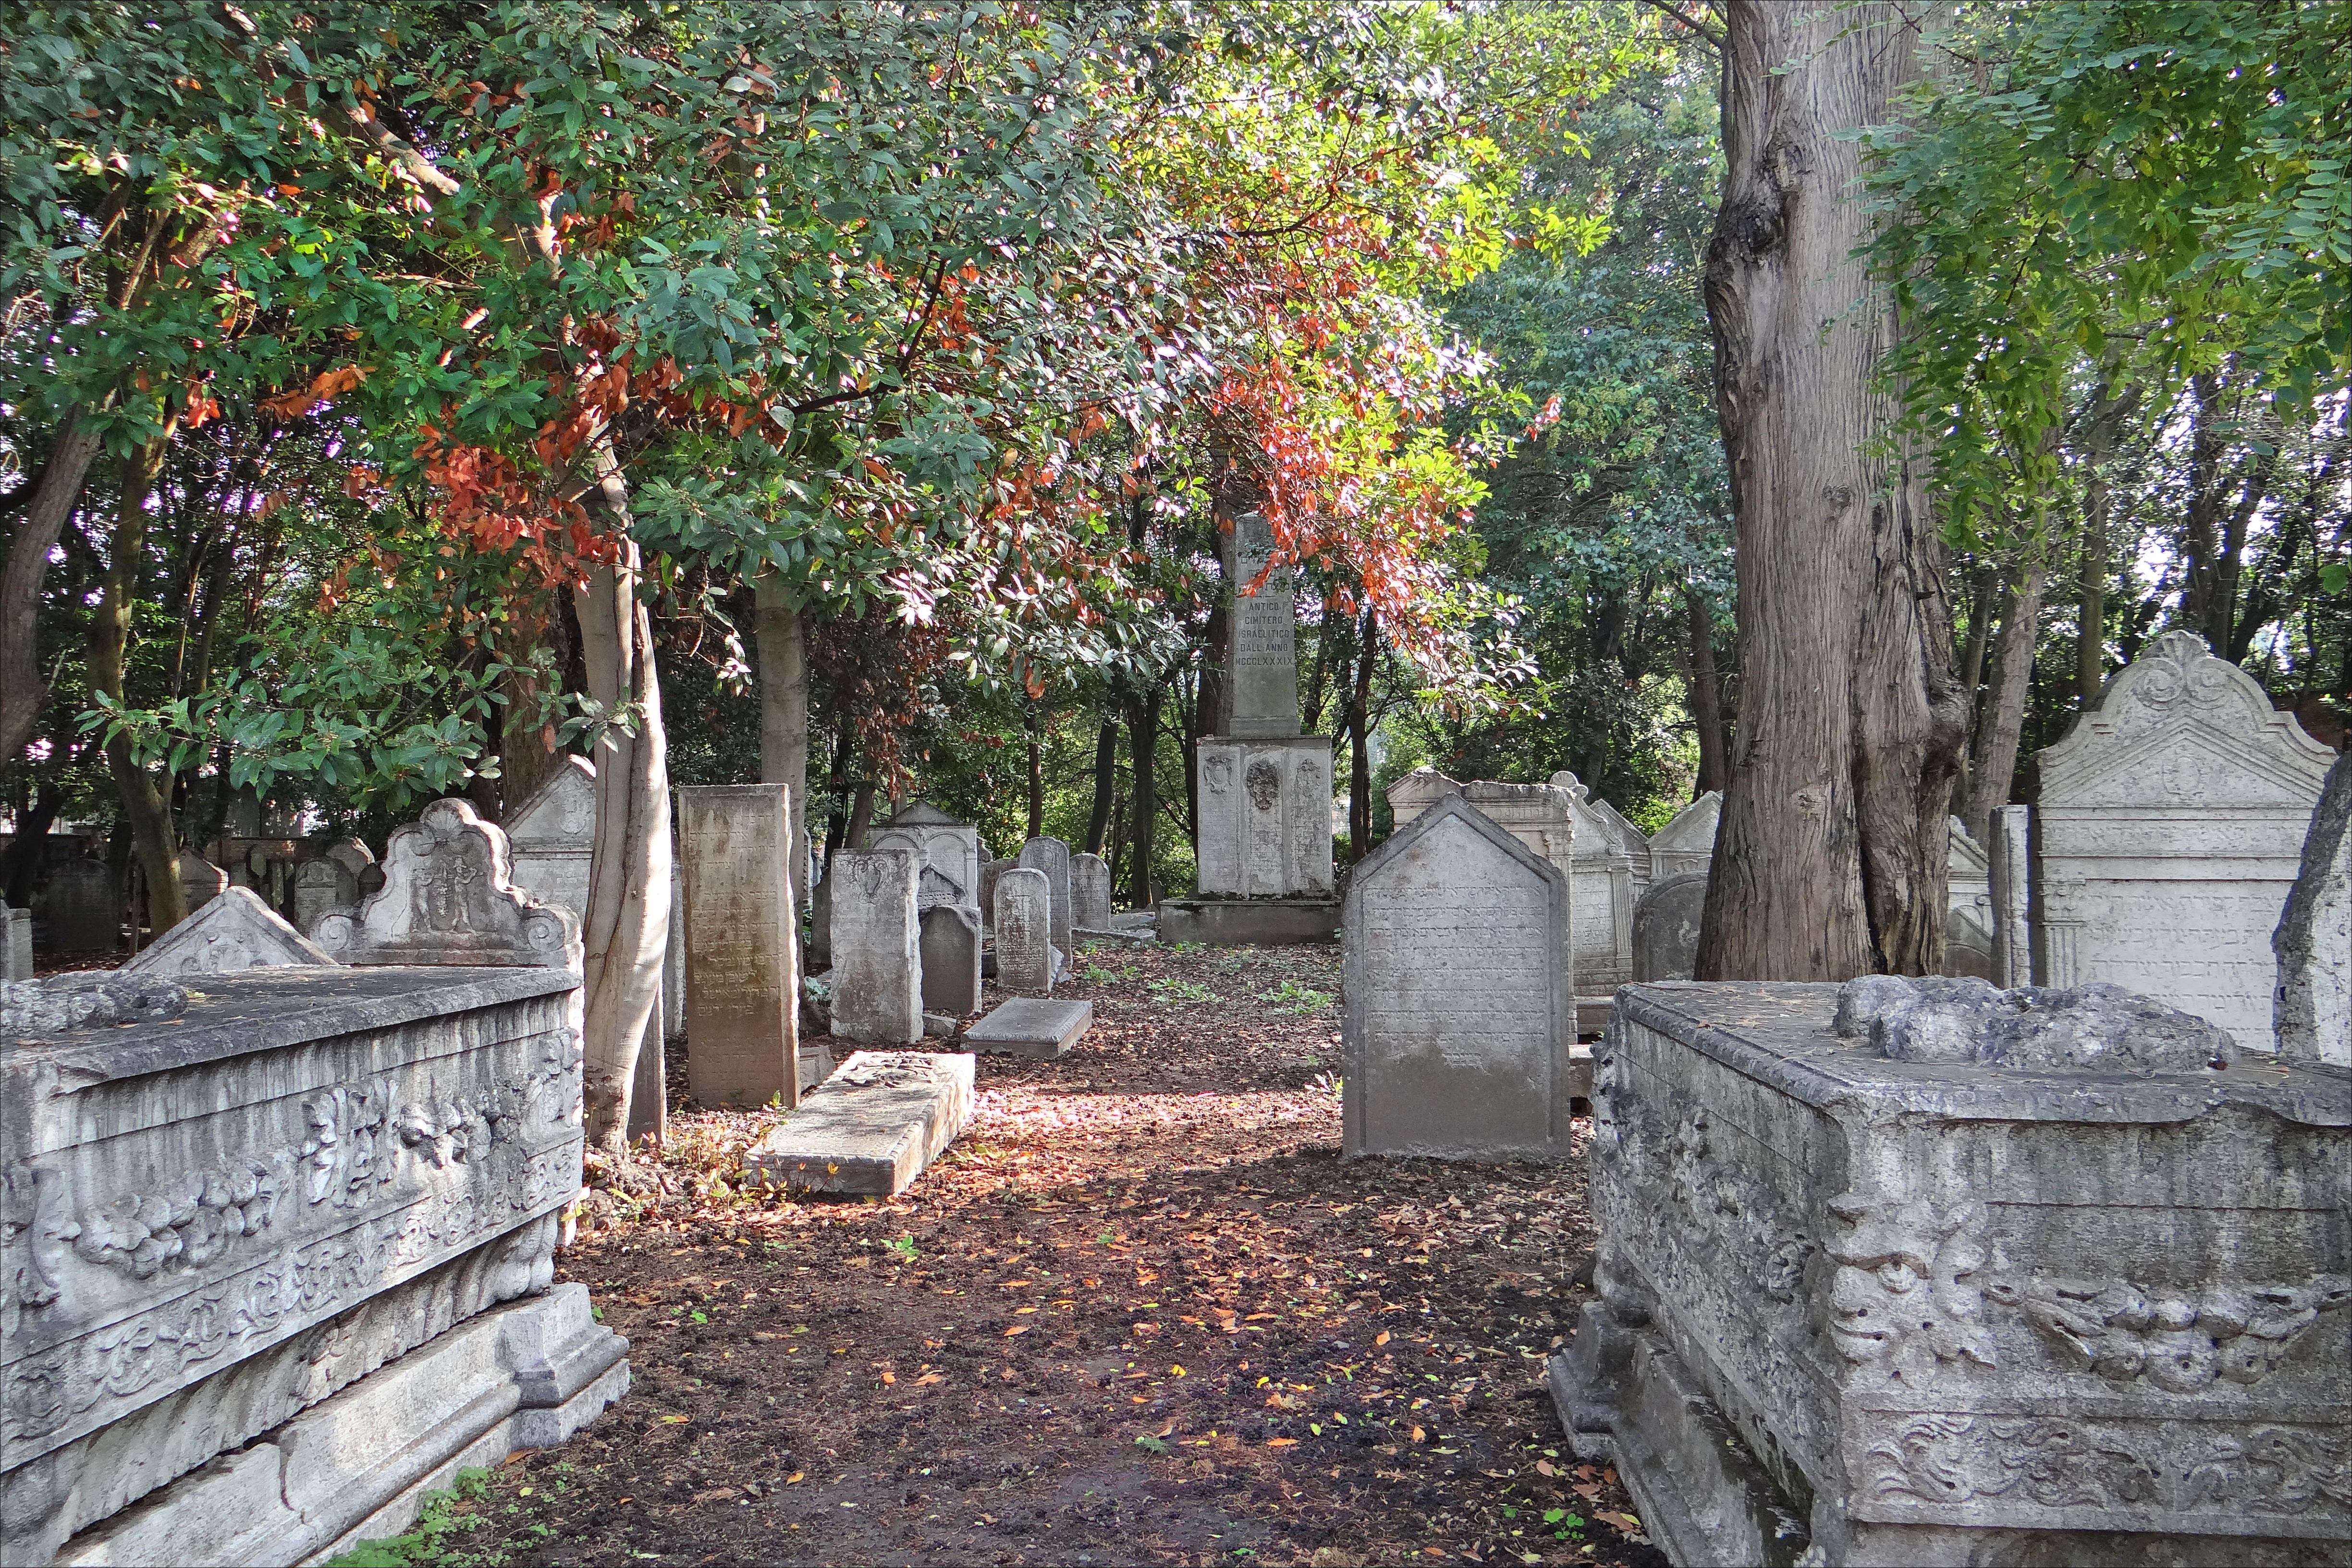 Jewish Cemetery of Venice - Judischer Friedhof - Universitas Judeorum